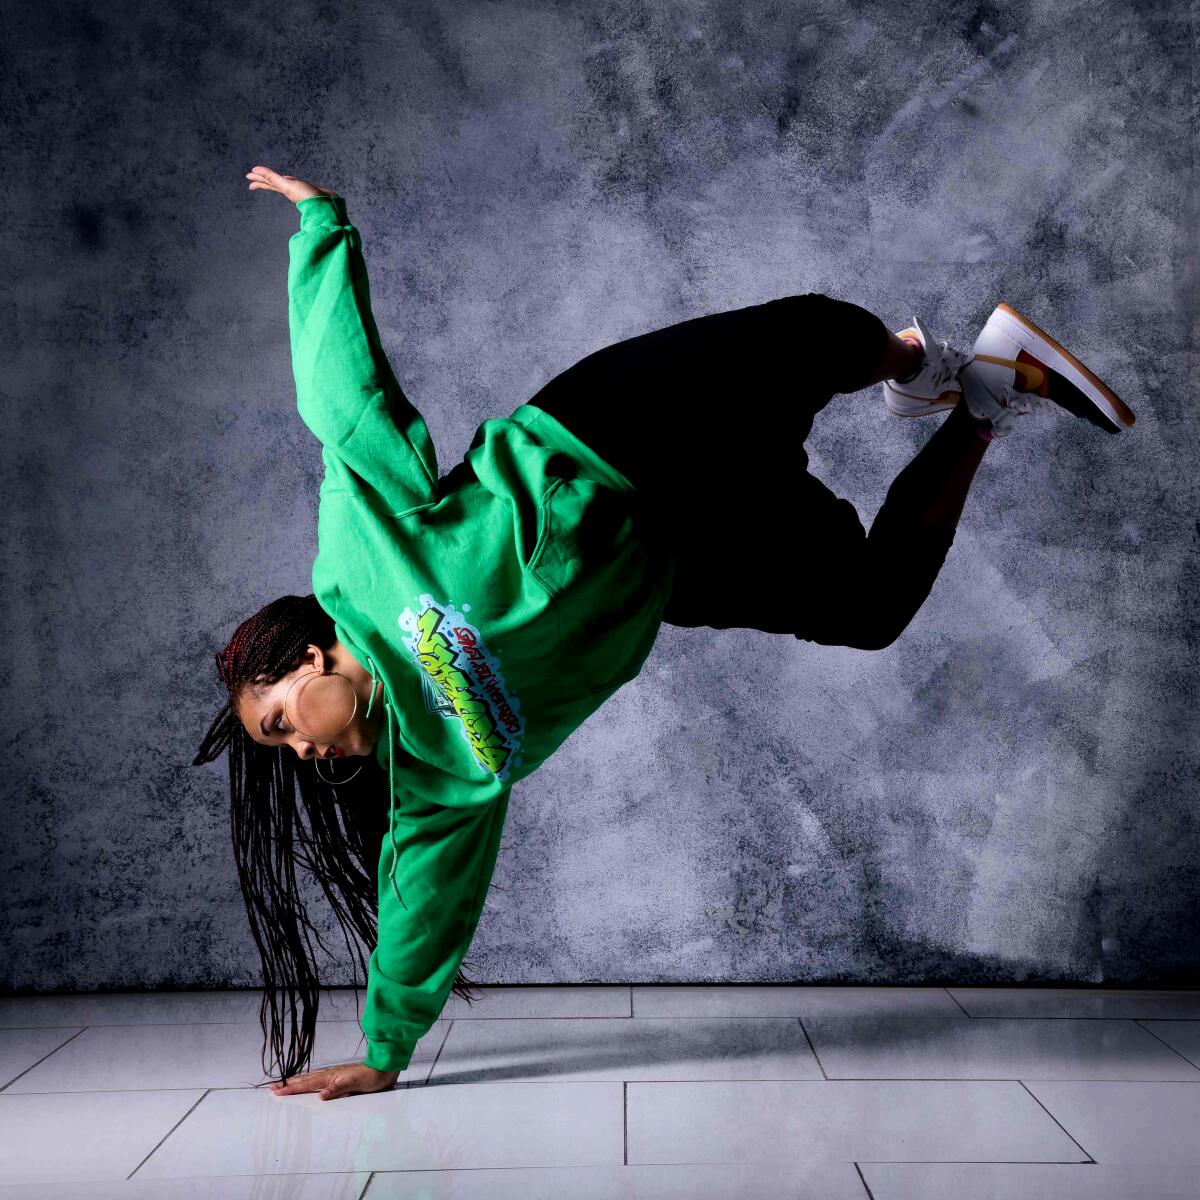 Actress, choreographer and dancer Ariyan Johnson kicks up her feet and balances on one arm.